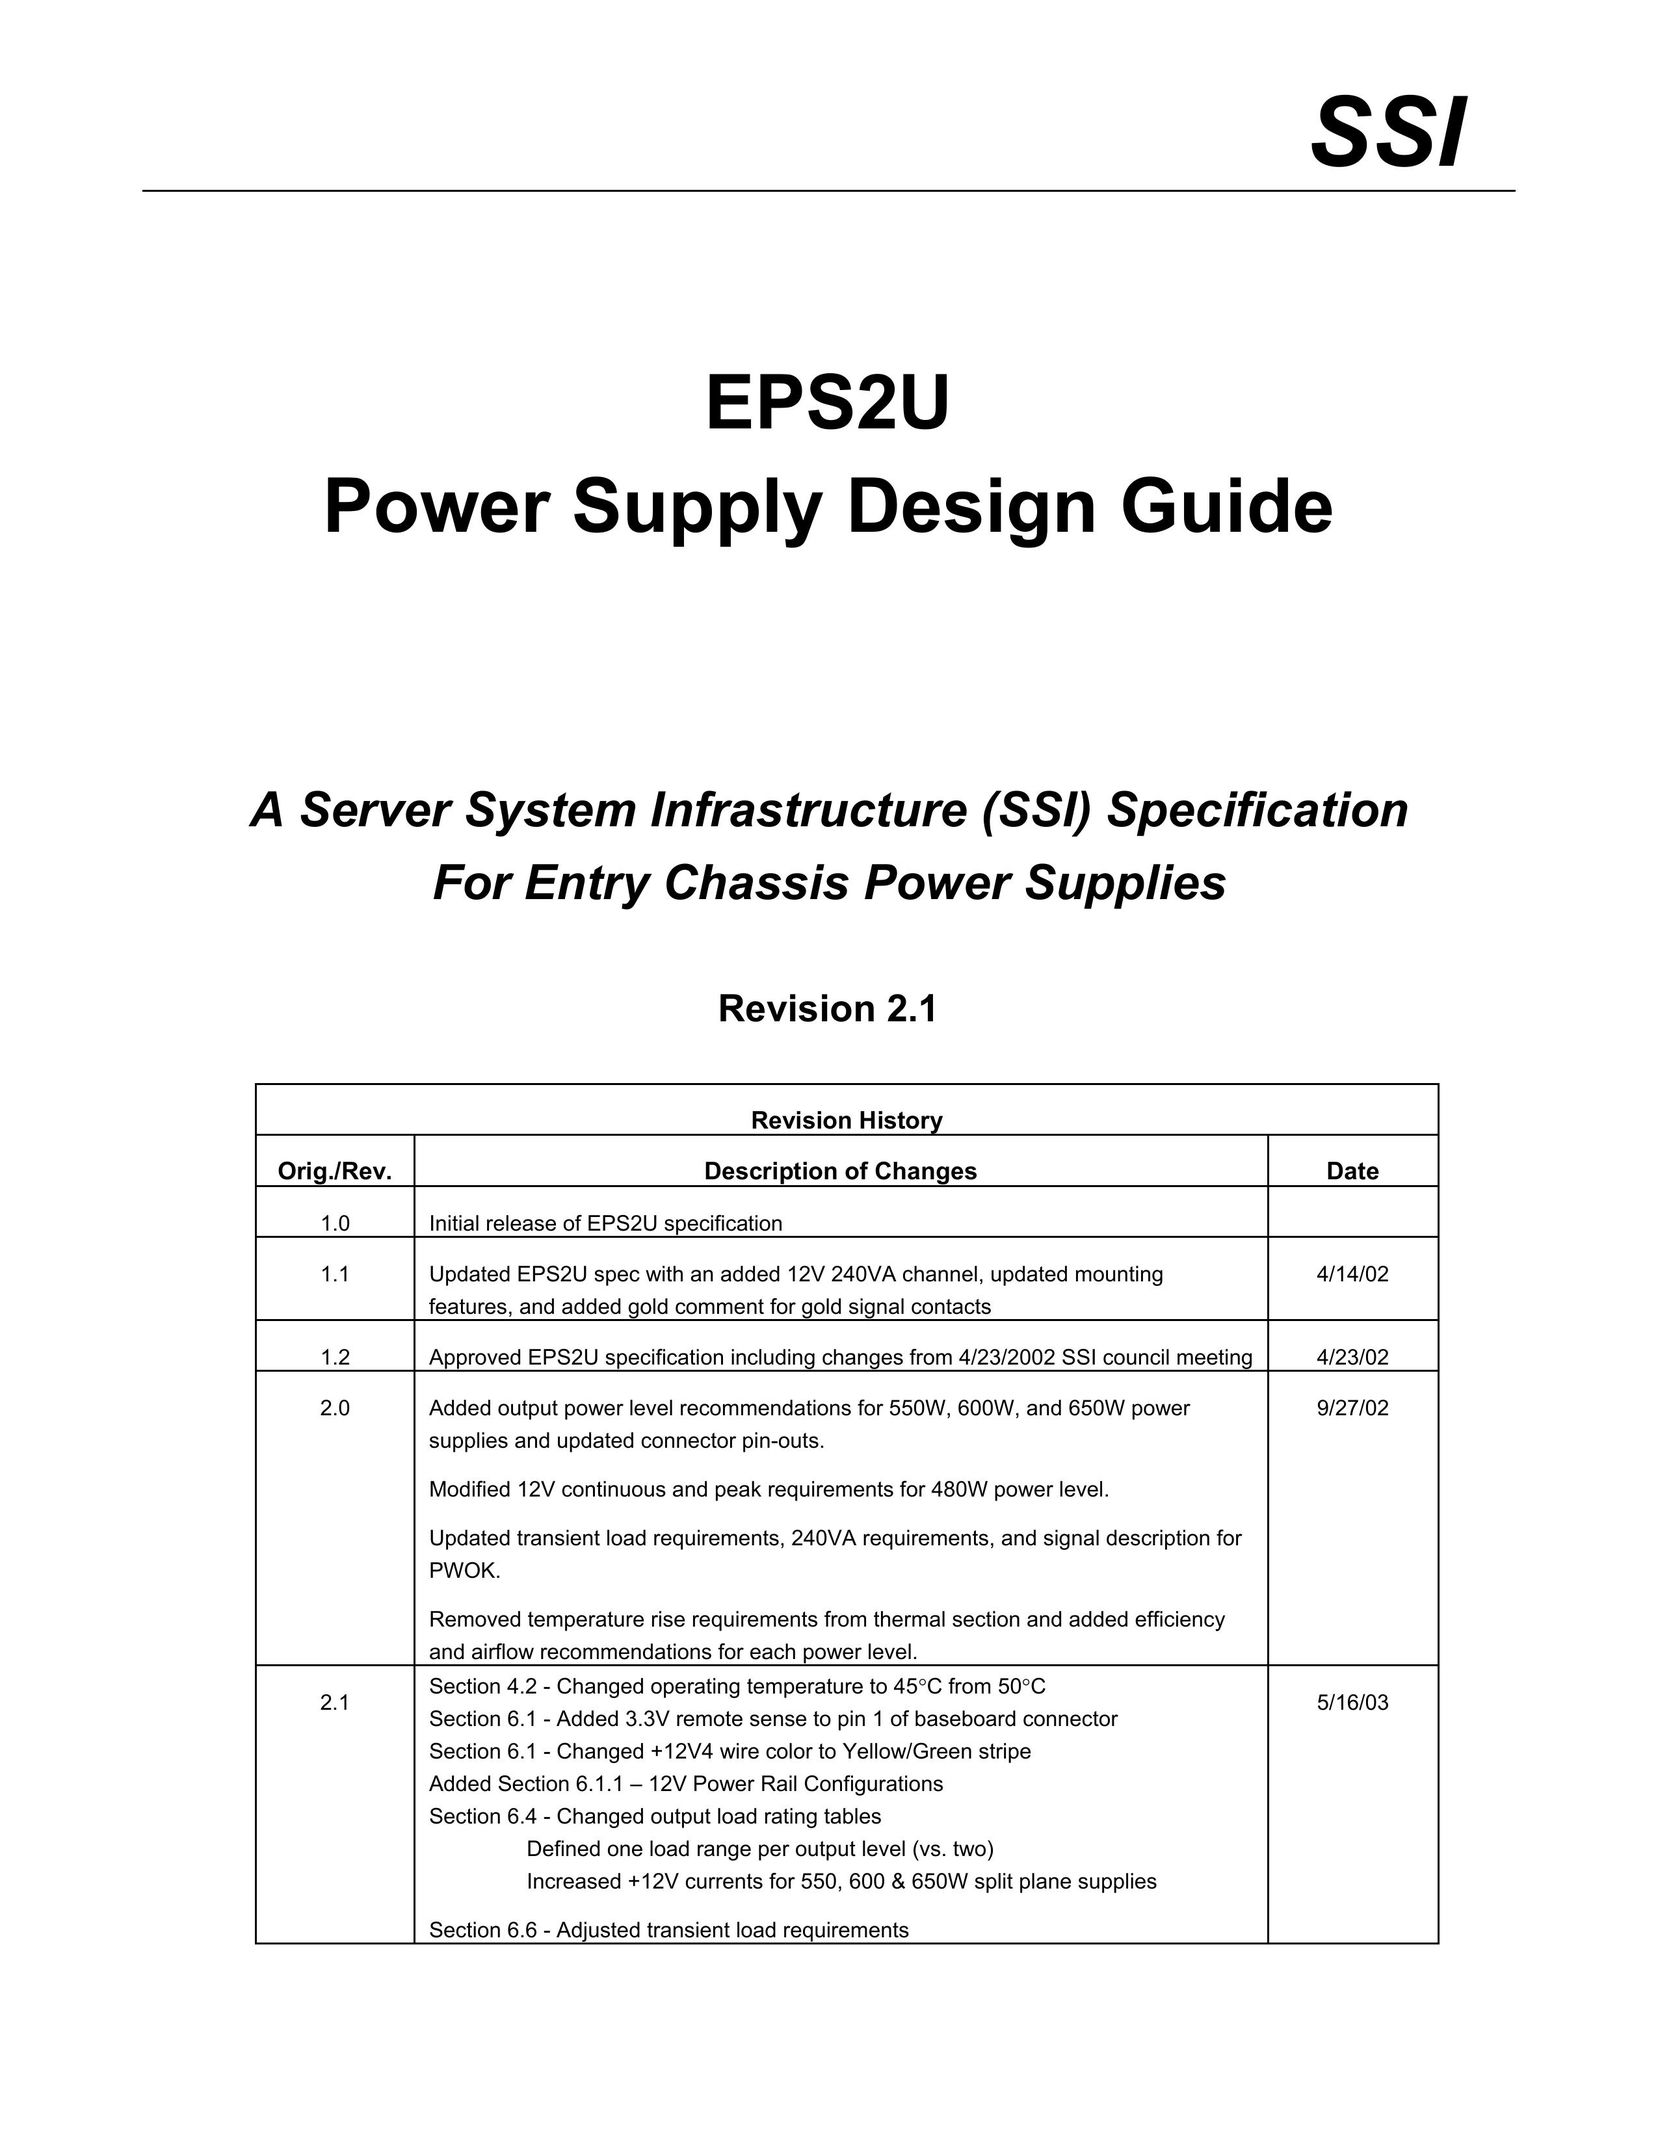 SSI America EPS2U Power Supply User Manual